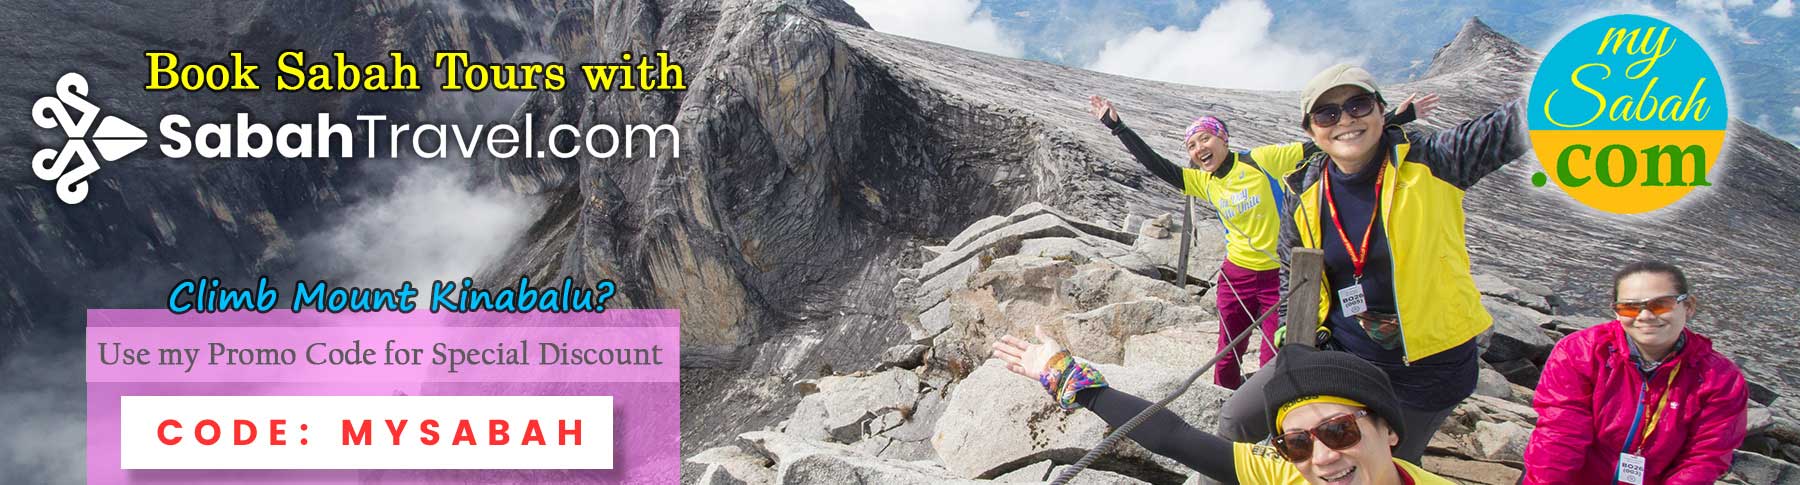 Tour package to climb Mount Kinabalu